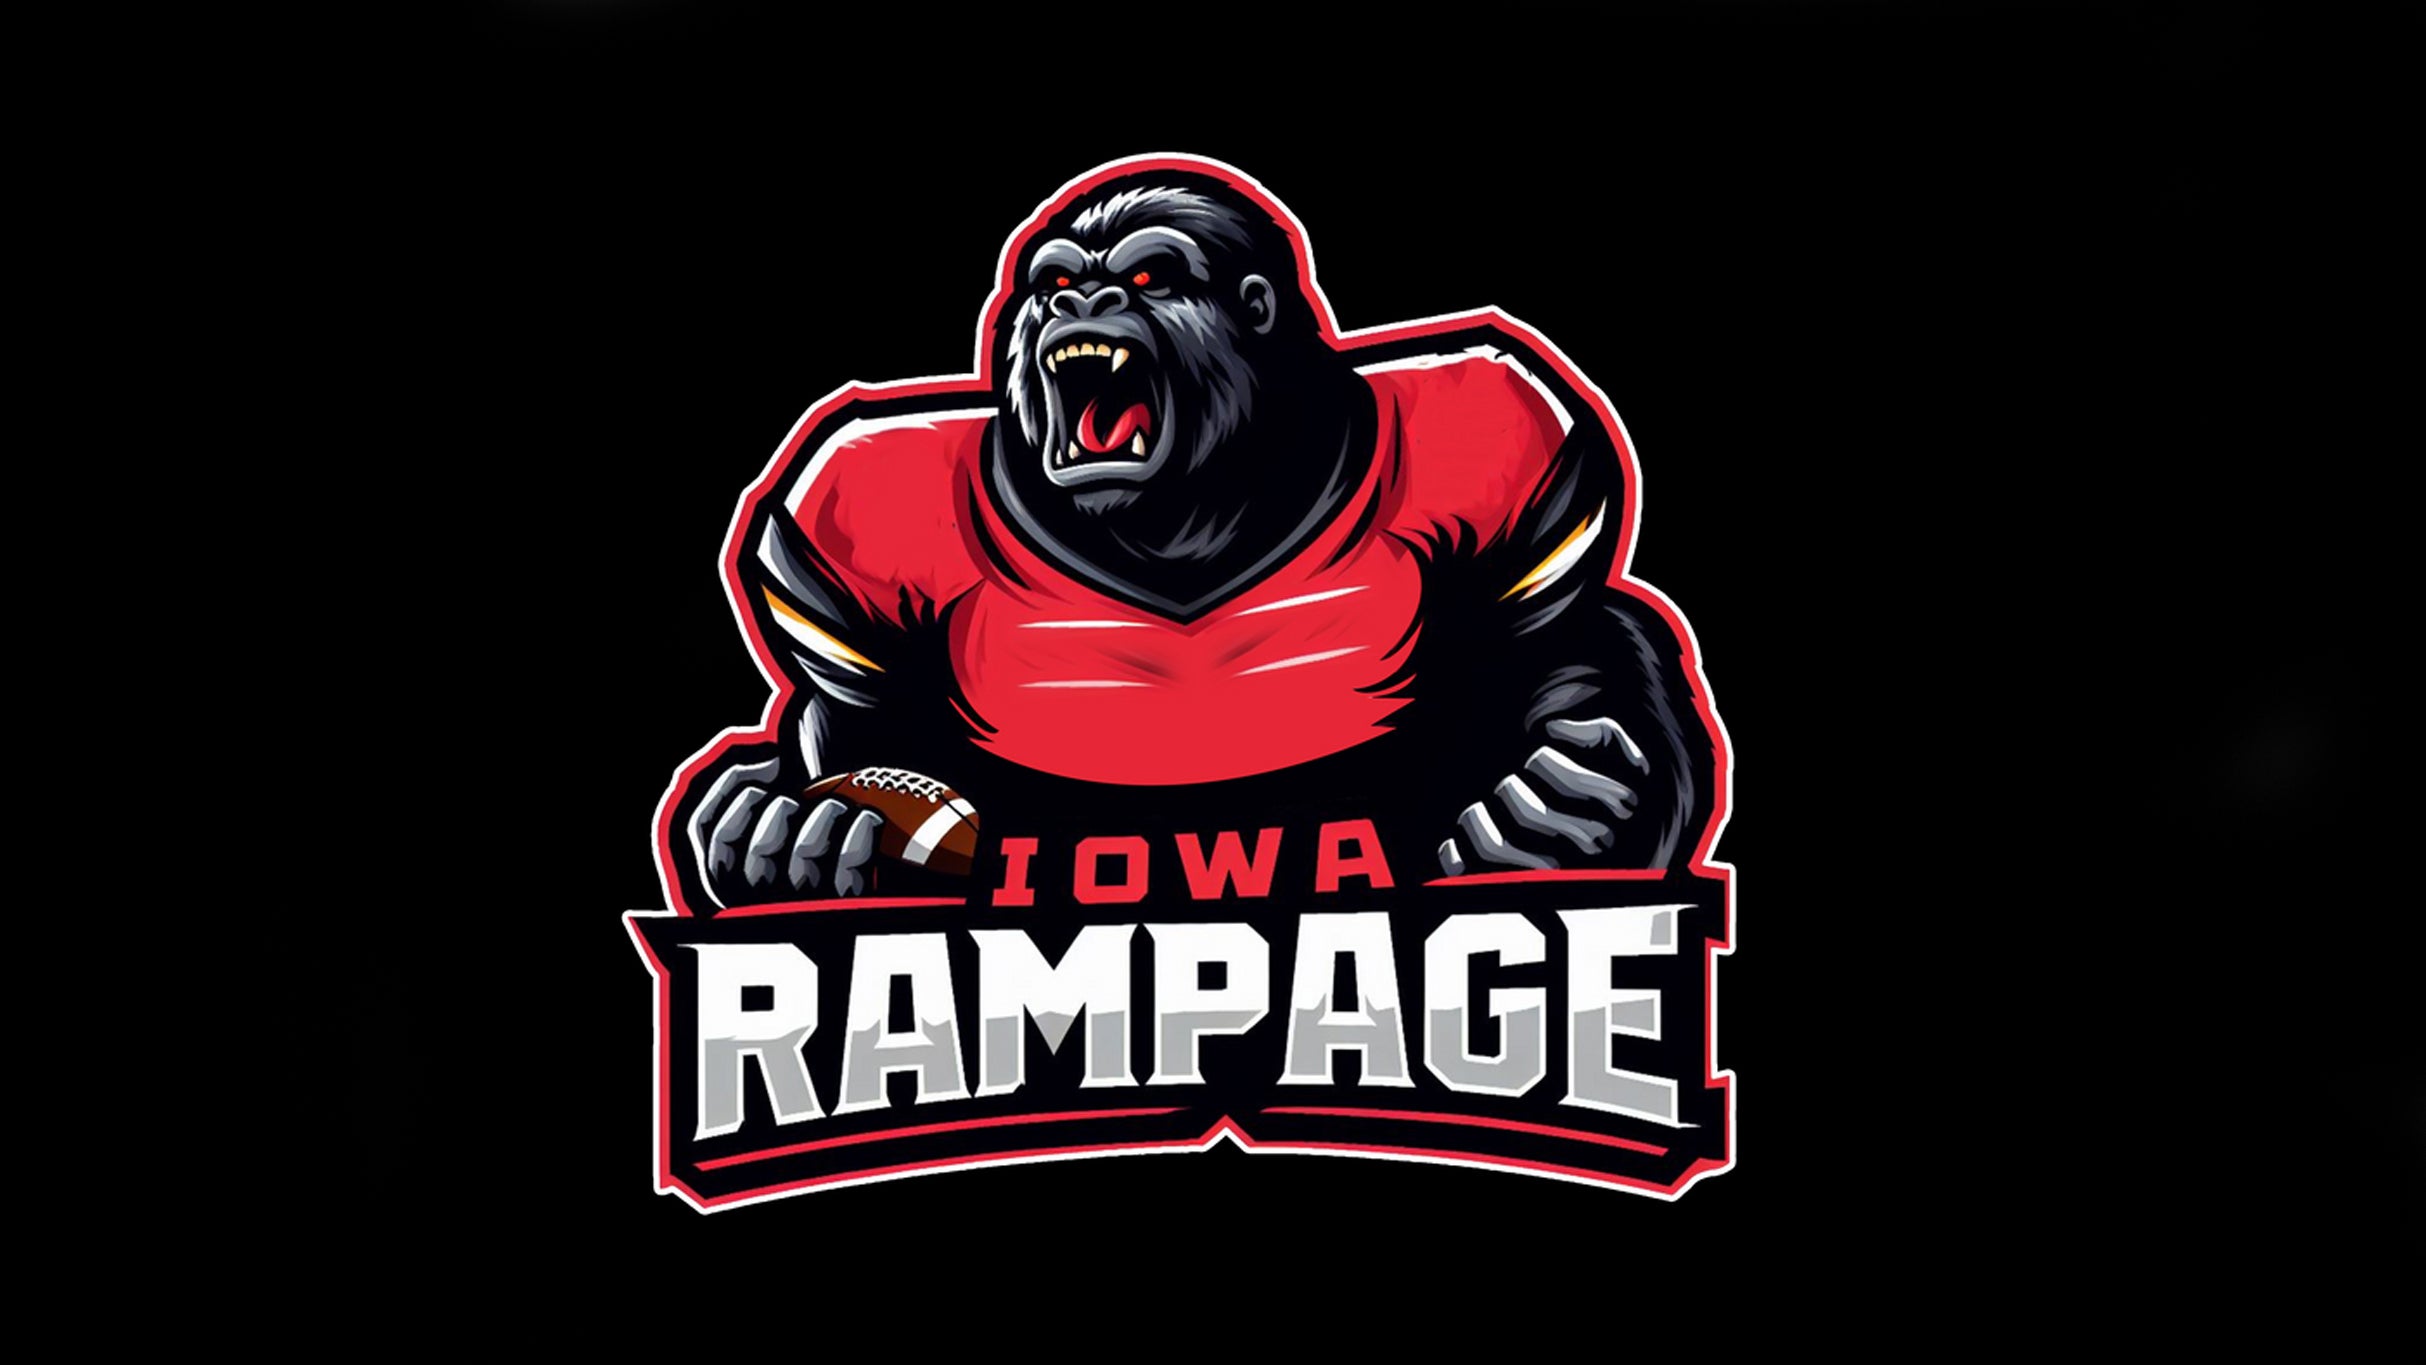 Iowa Rampage presale information on freepresalepasswords.com